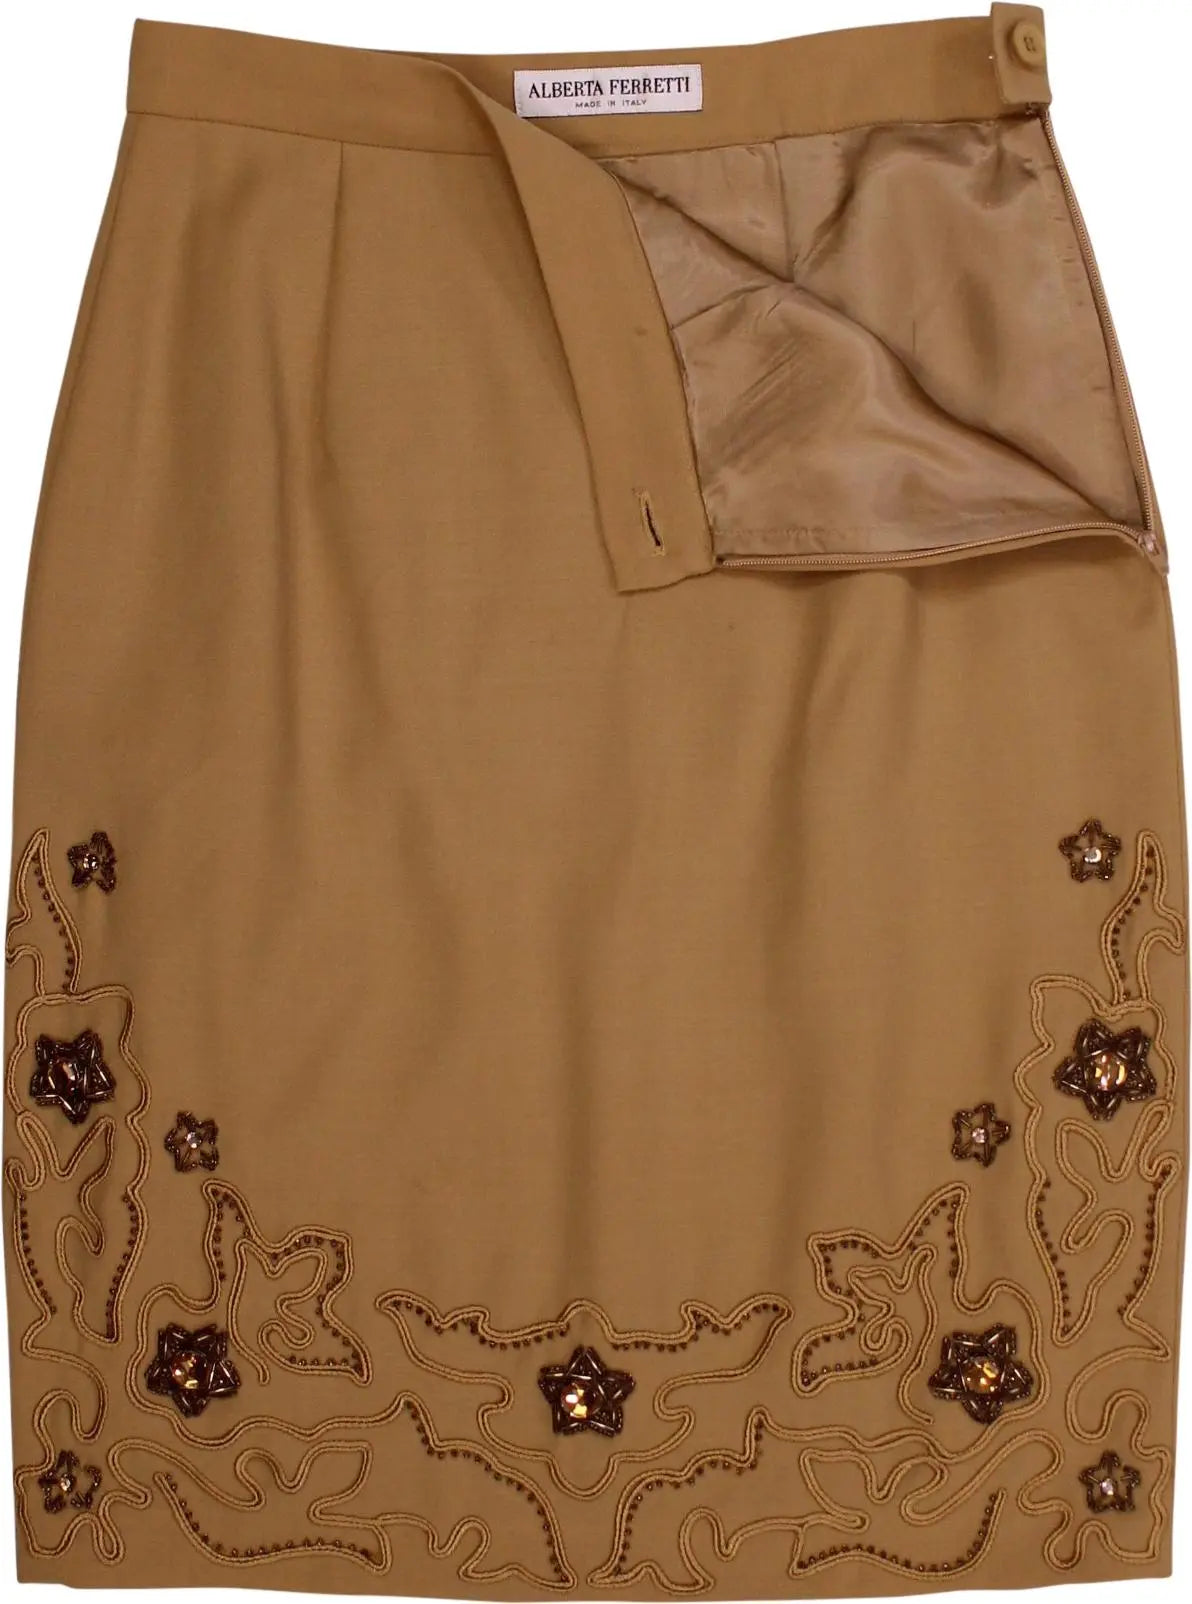 Alberta Ferretti - Beaded Italian Skirt- ThriftTale.com - Vintage and second handclothing